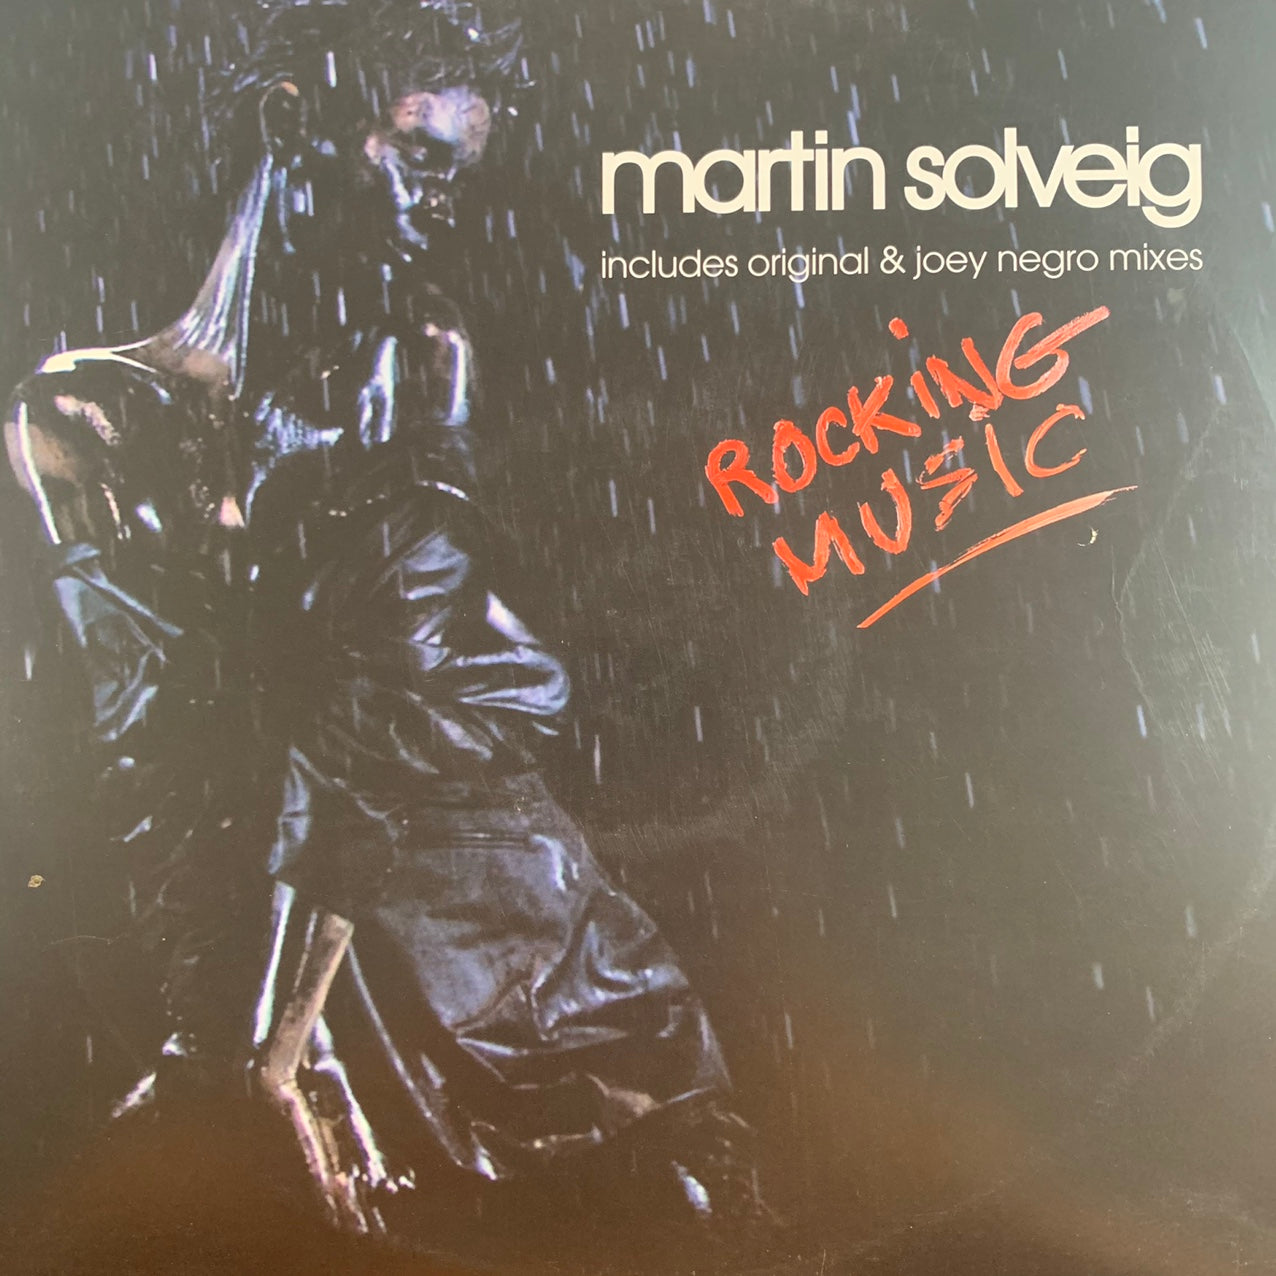 Martin Solveig “Rocking Music” includes Original and Joey Negro Mixes 4 Version 12inch Vinyl